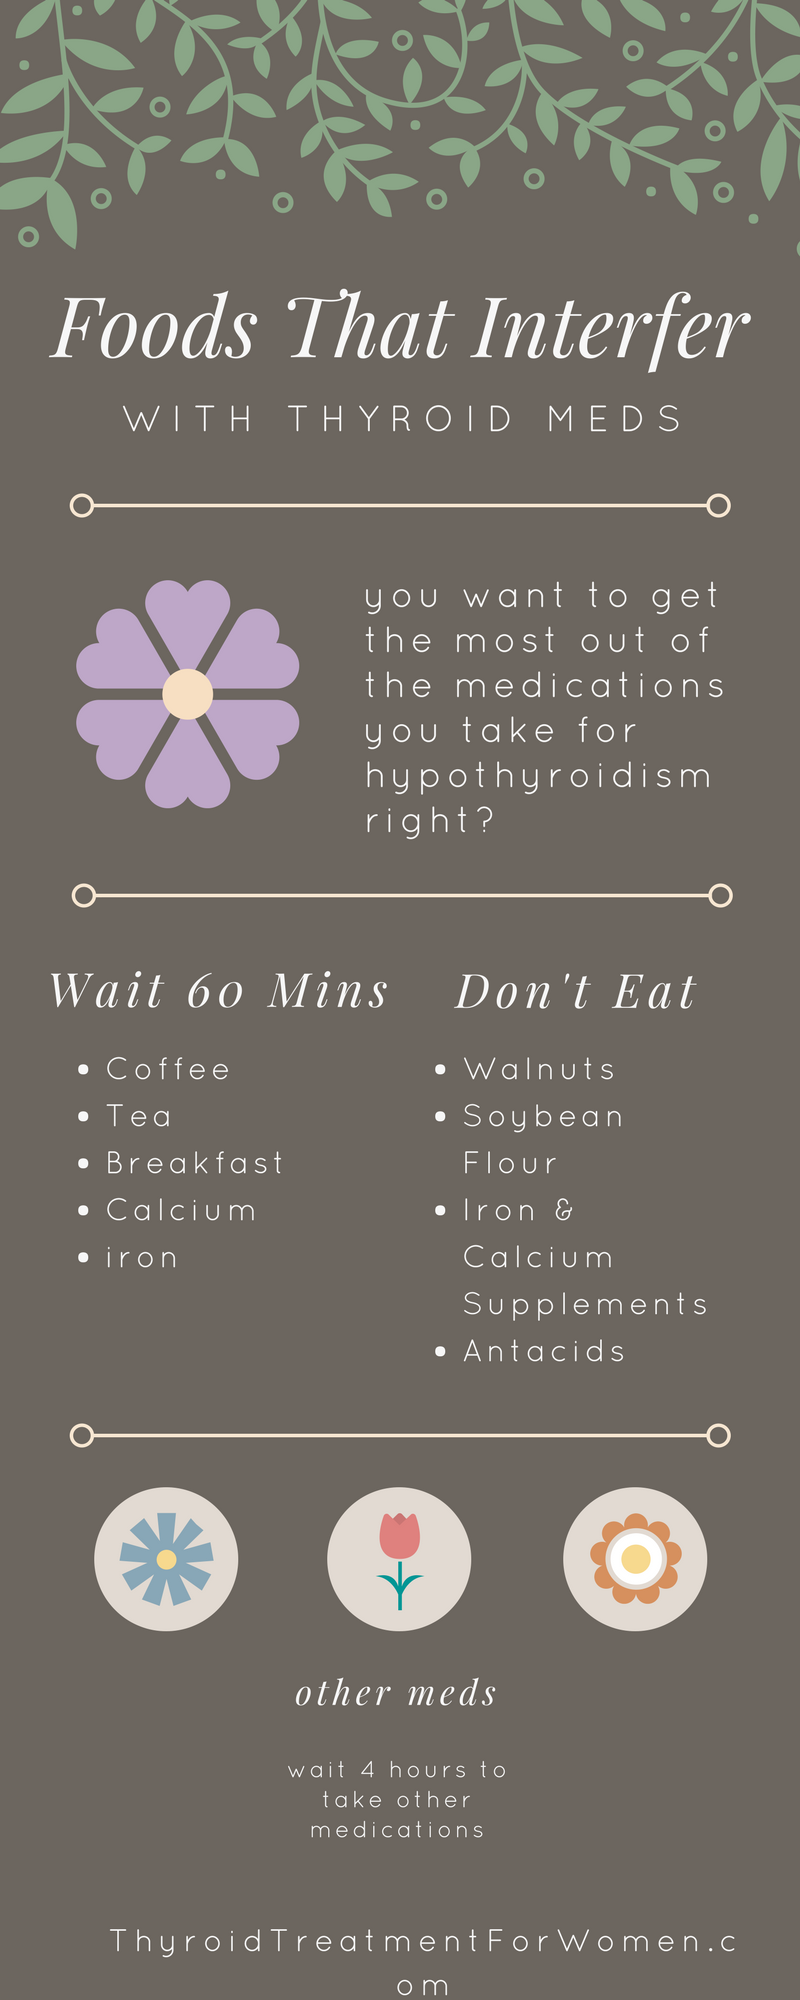 Foods that interfer with thyroid medications. #thyroidhealth #hypothyroidism #hashimoto @thyroidtreatmentforwomen